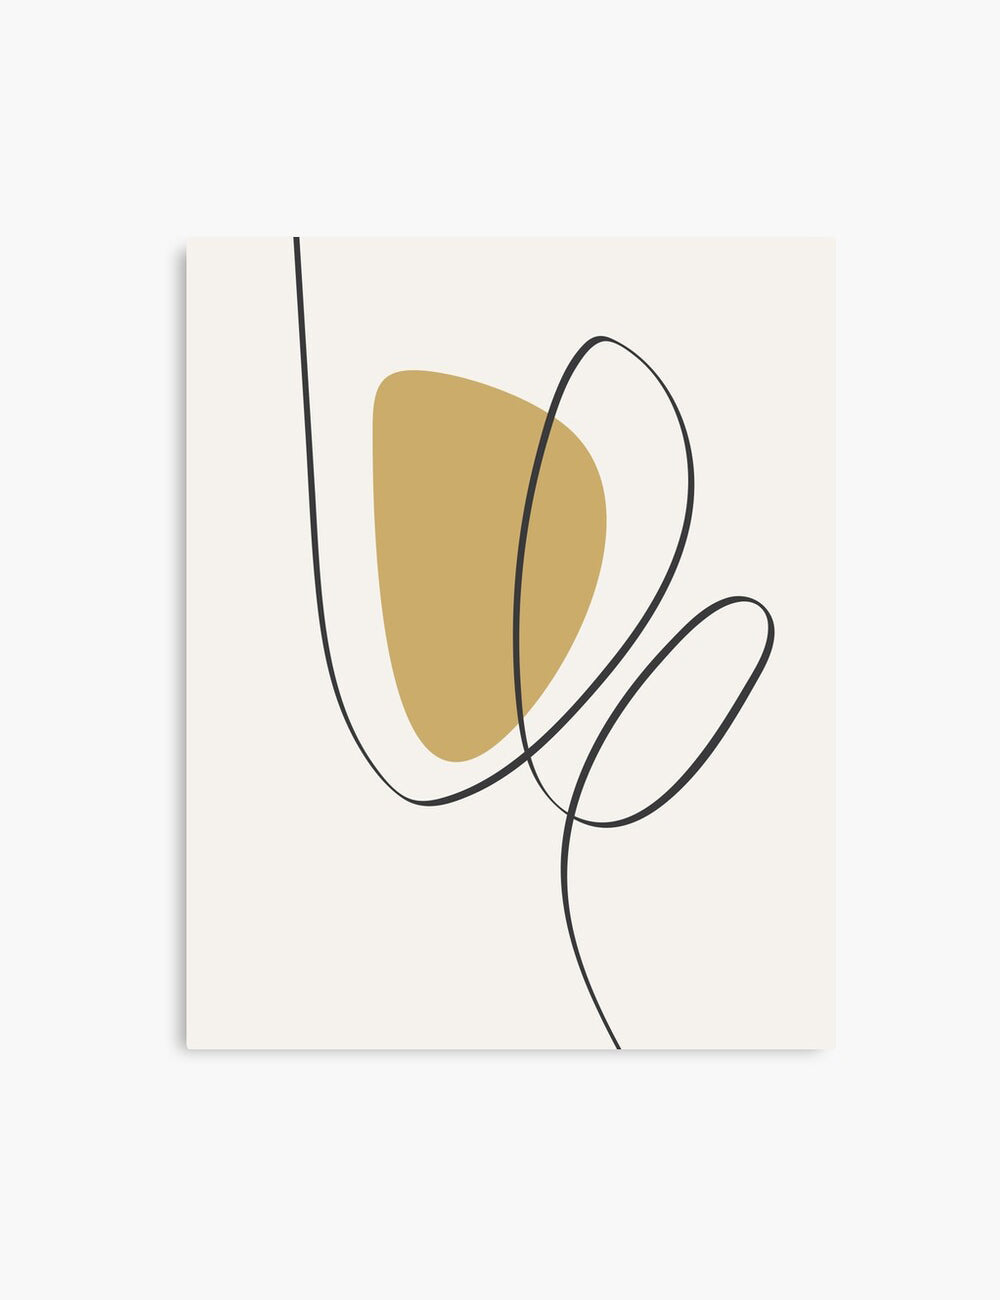 MINIMAL LINE ART. Abstract Shapes. Boho Aesthetic. Yellow Gold. Beige. Black. Printable Wall Art Illustration. - PAPER MOON Art & Design